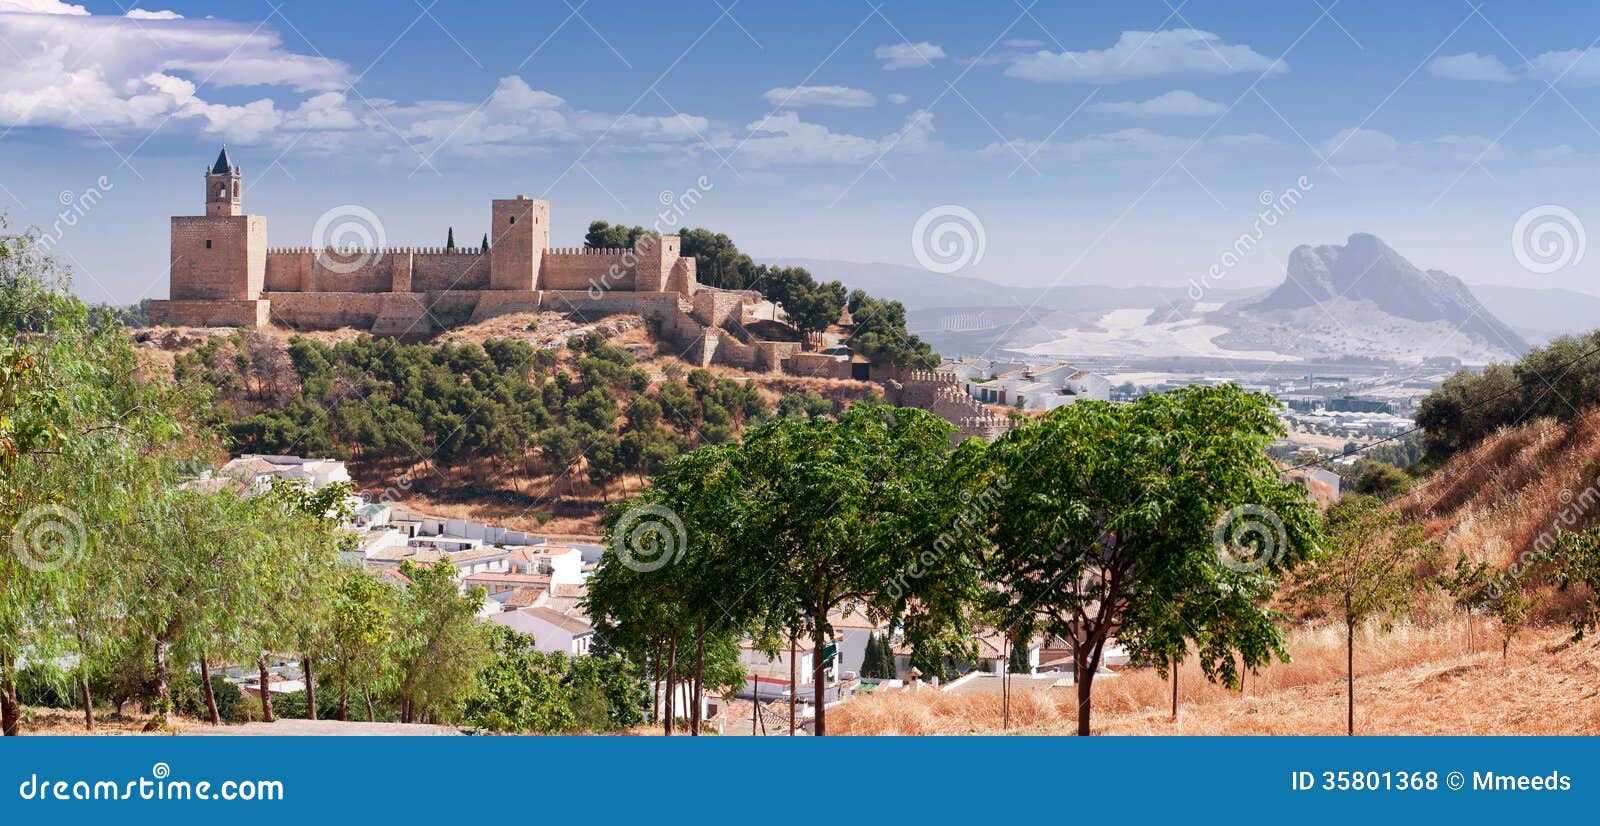 castle fortress real colegiata de santa maria la mayor, antequera, malaga province, andalucia, spain